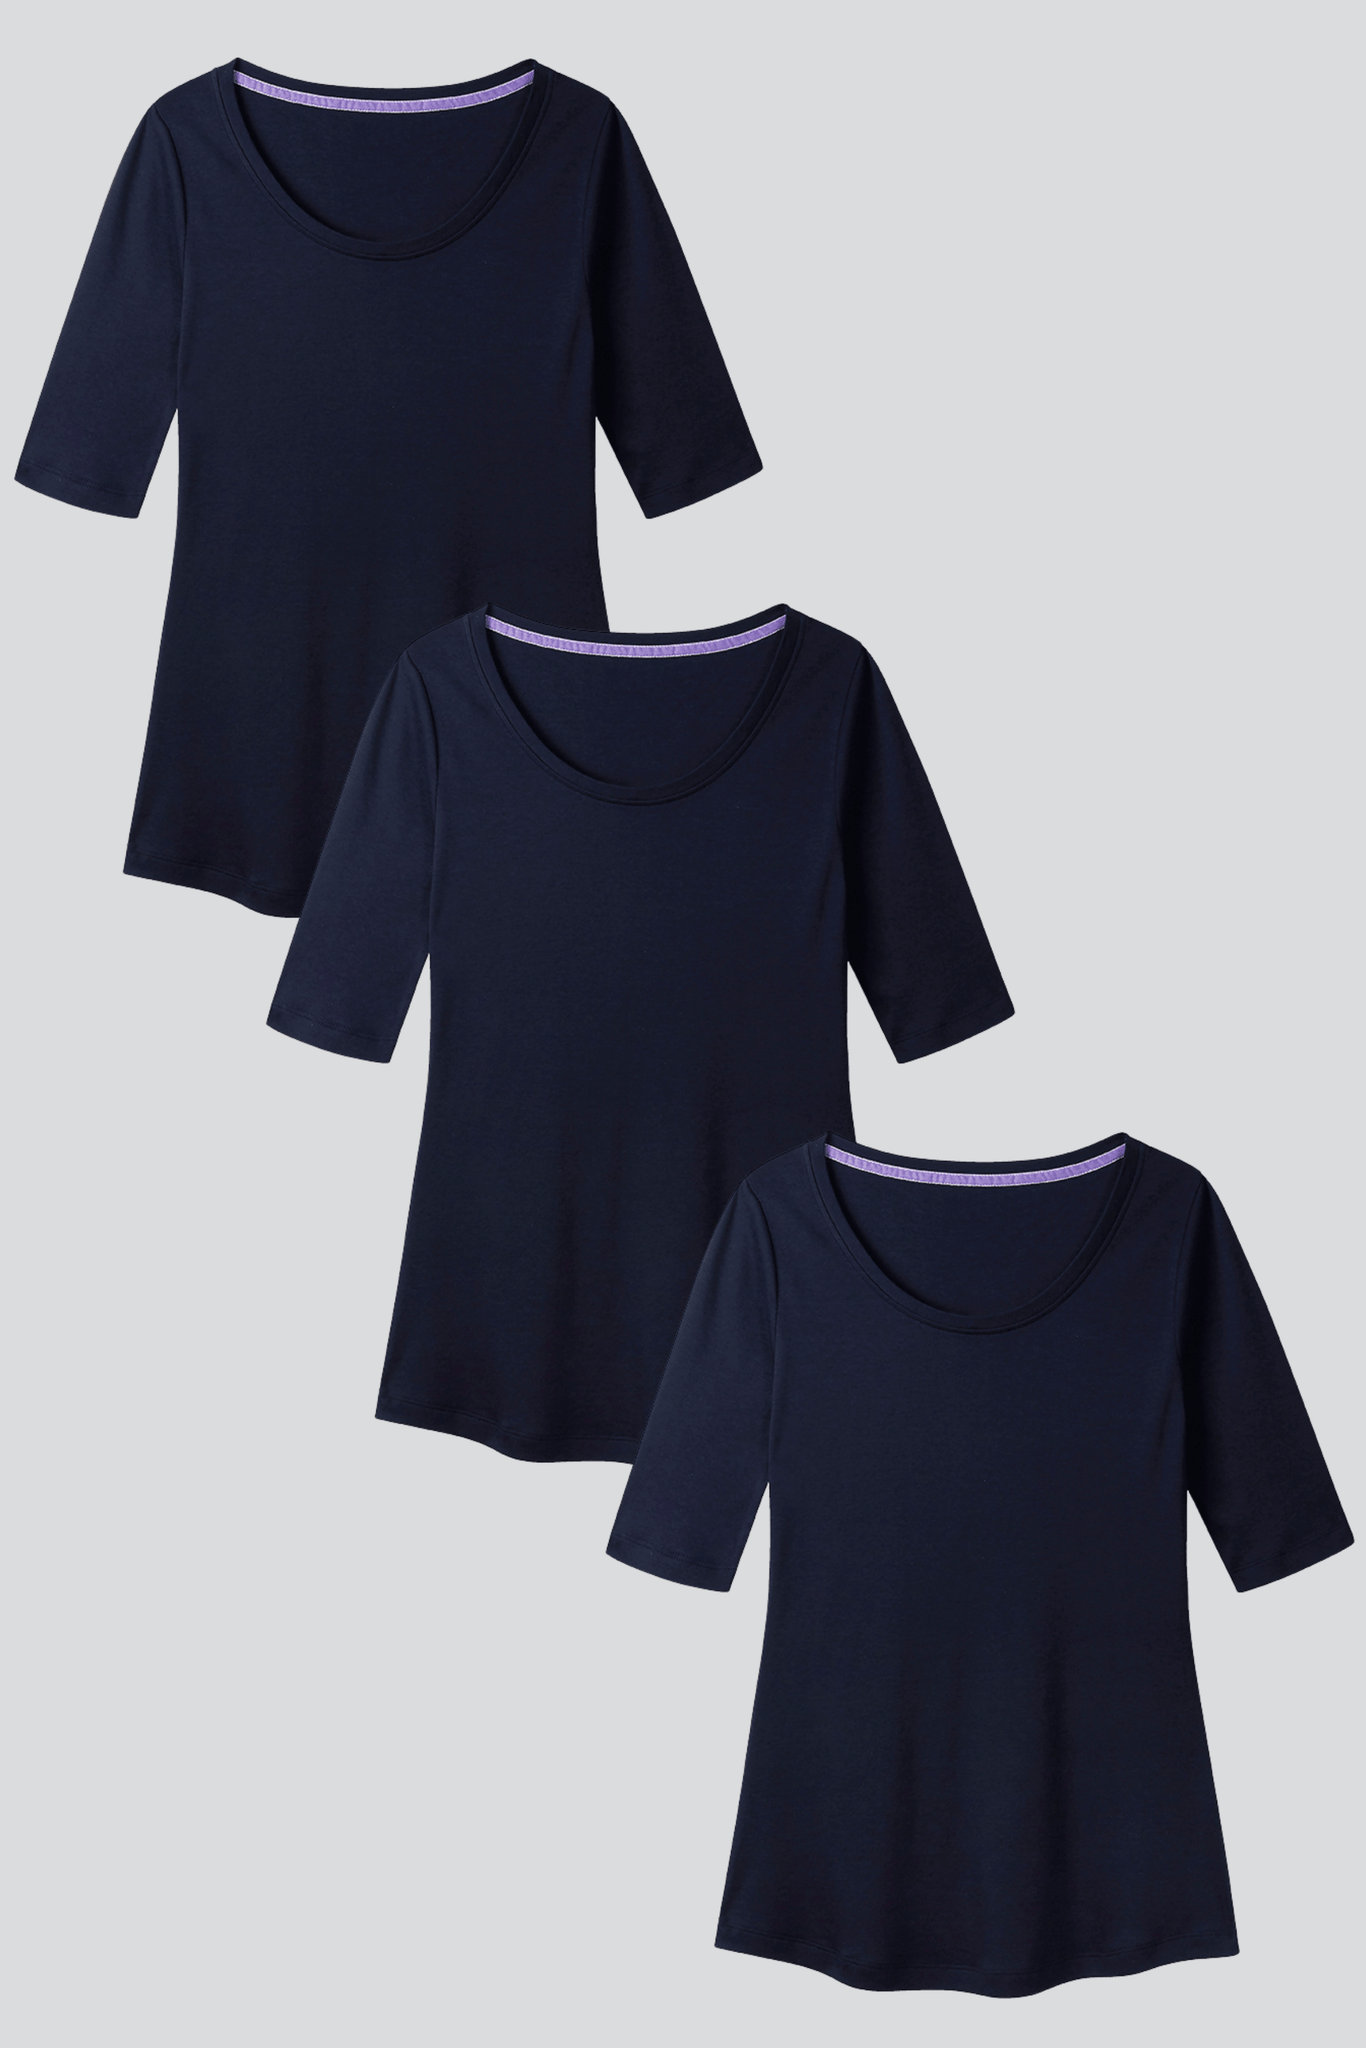 Ladies luxury lavender scoop neck t-shirt | Lavender Hill Clothing | T-Shirts